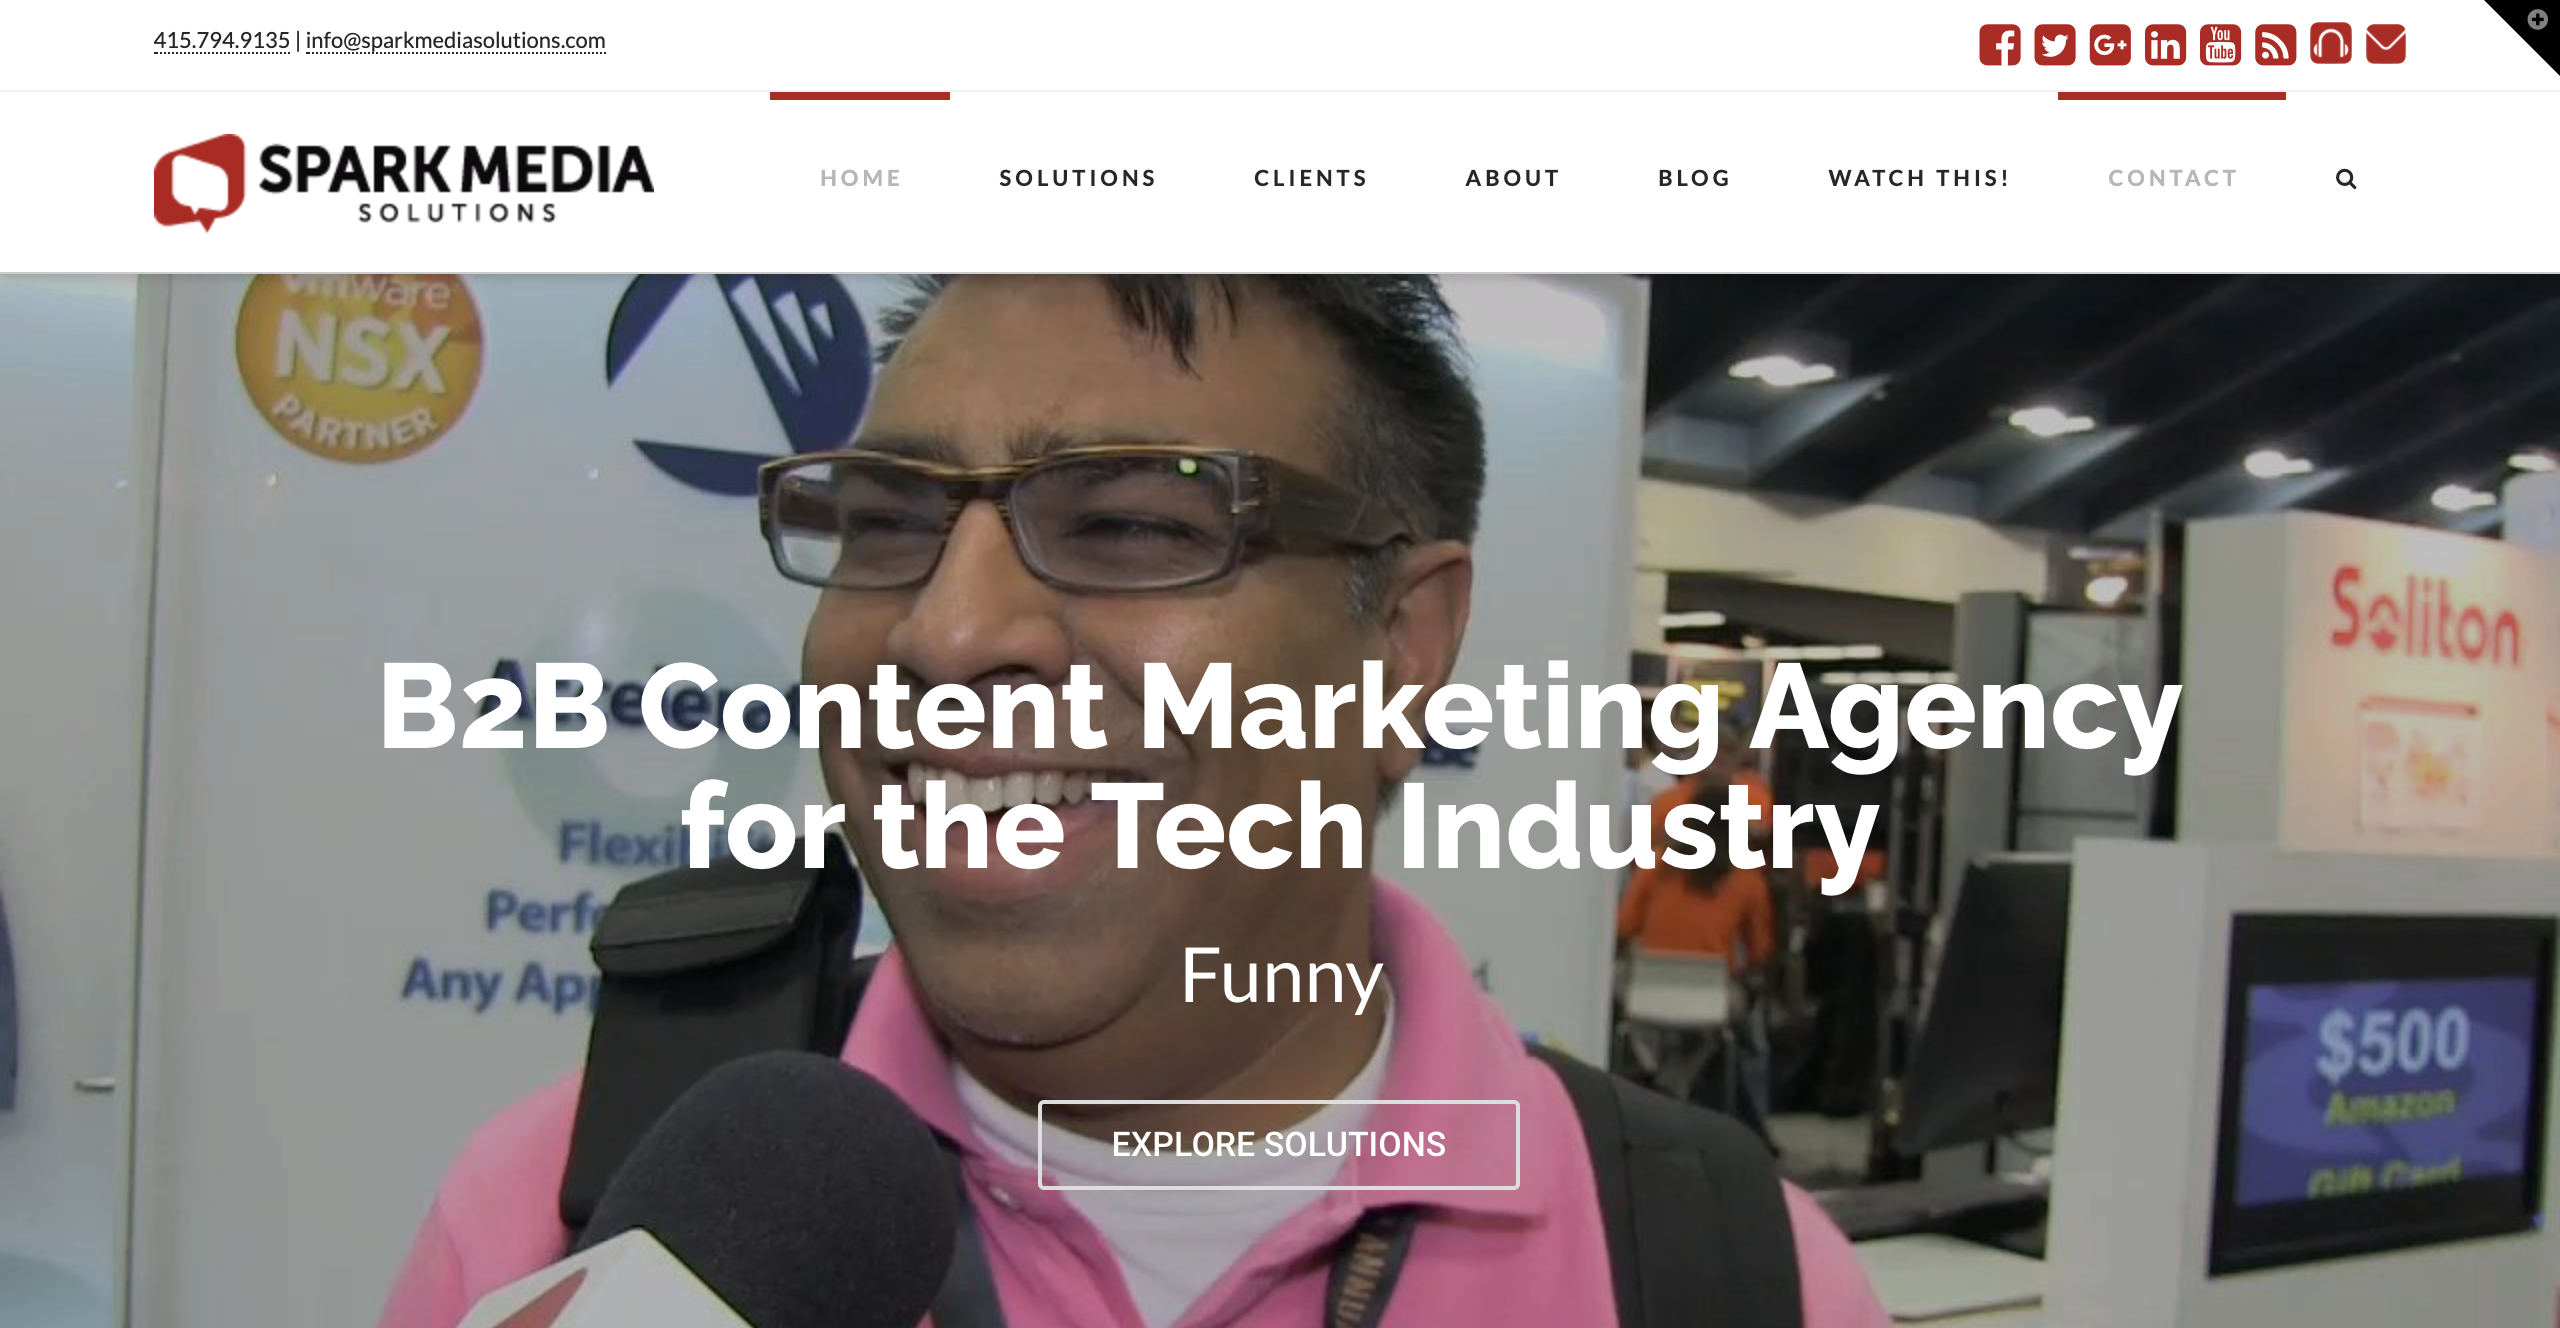 Spark Media Solutions content marketing agency